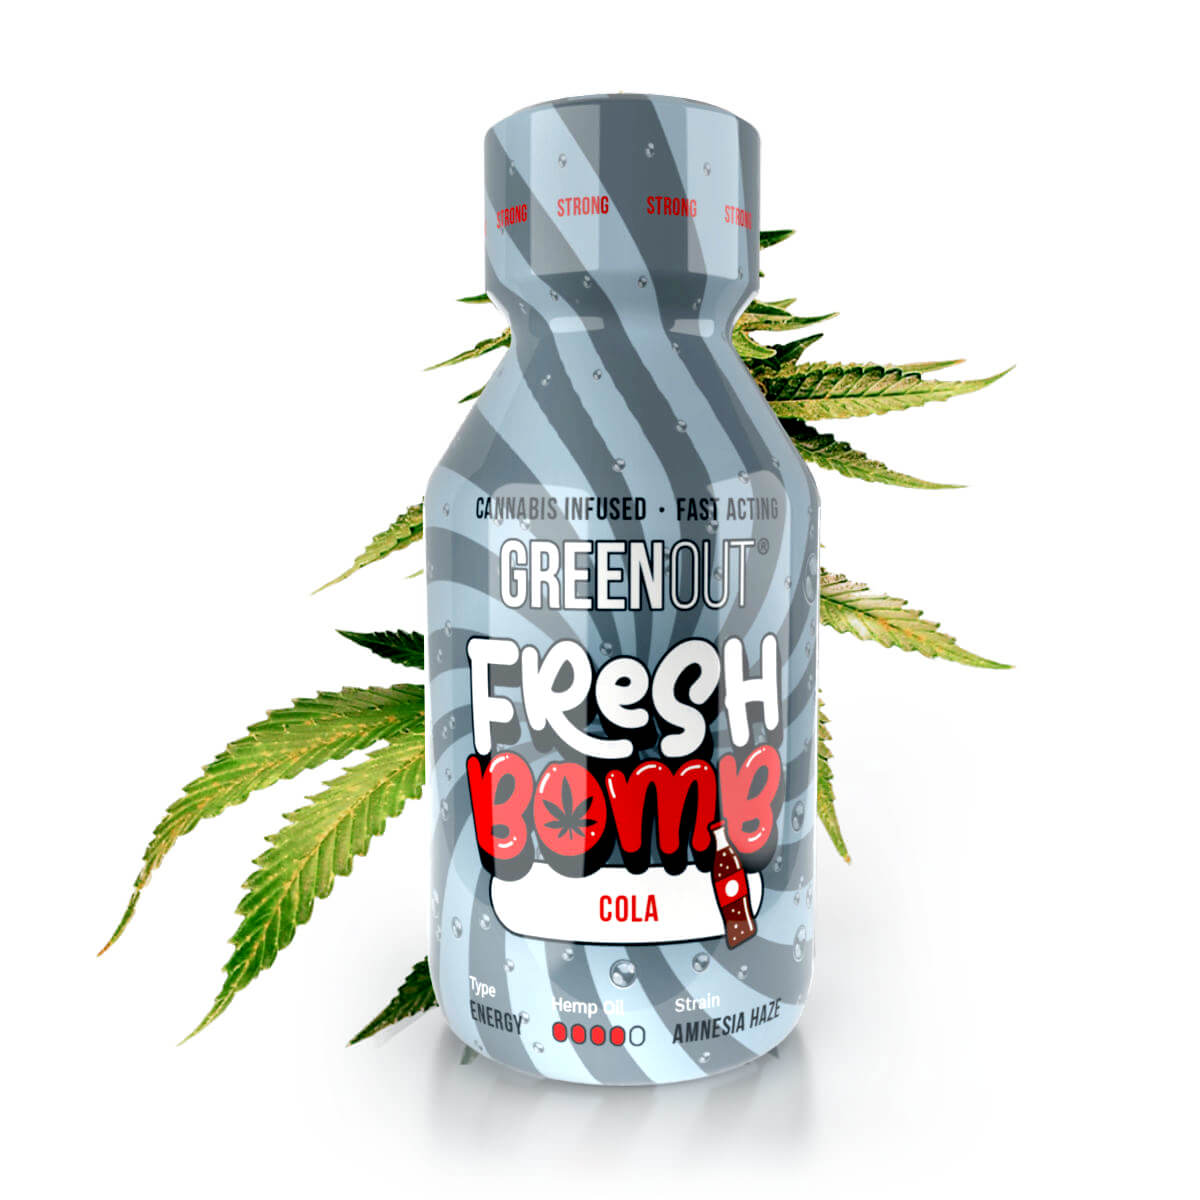 Greenout-fresh-bomb-cola-strong-polandweed.pl_